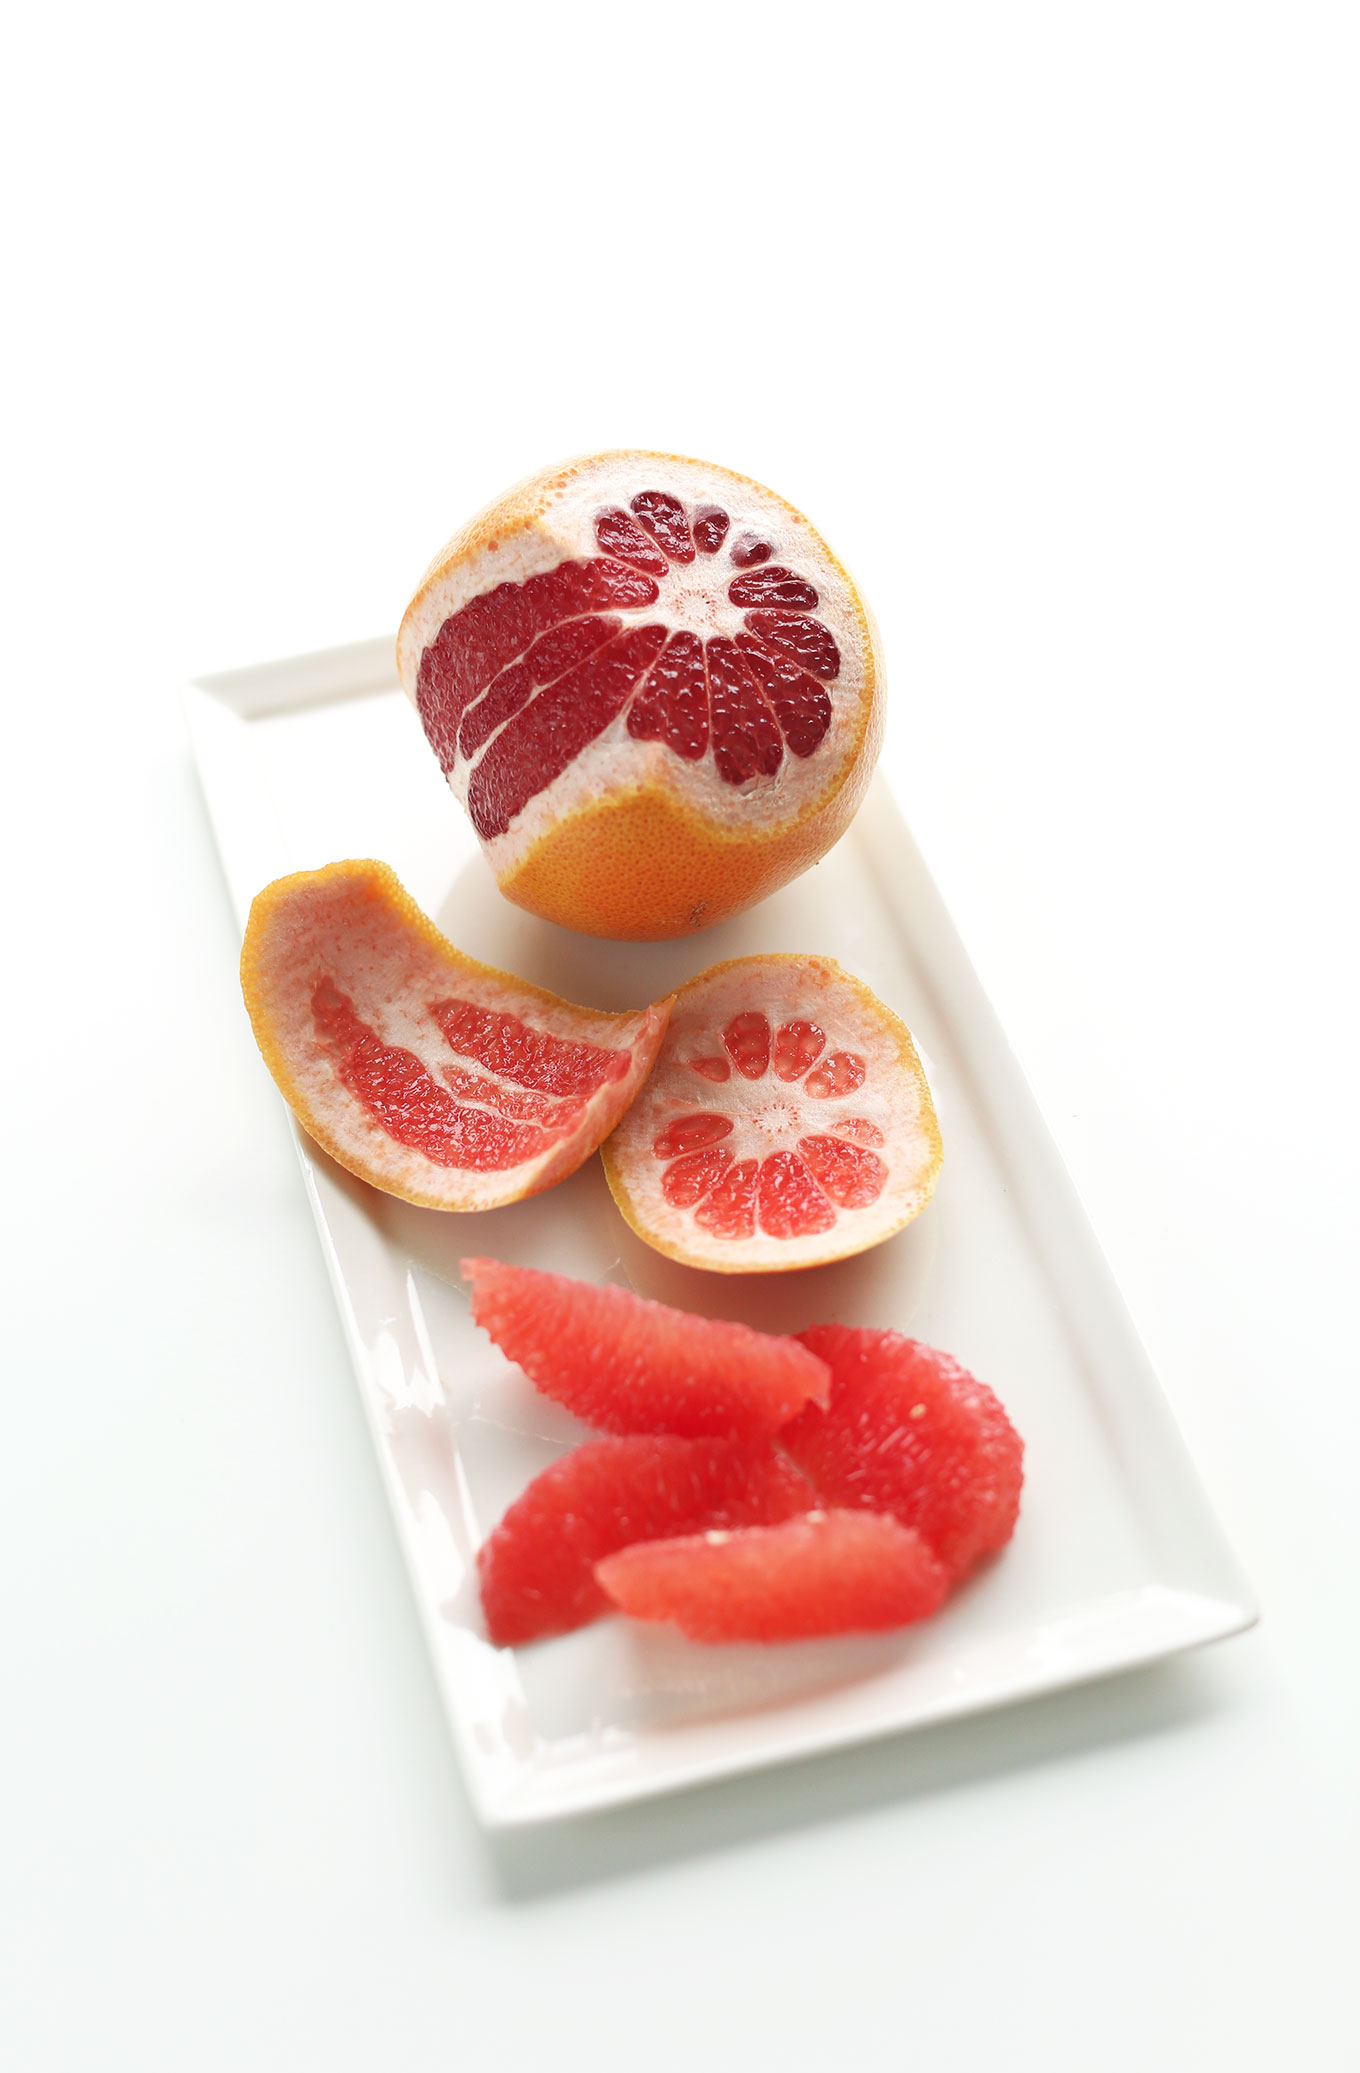 Platter of peeled and sliced grapefruit